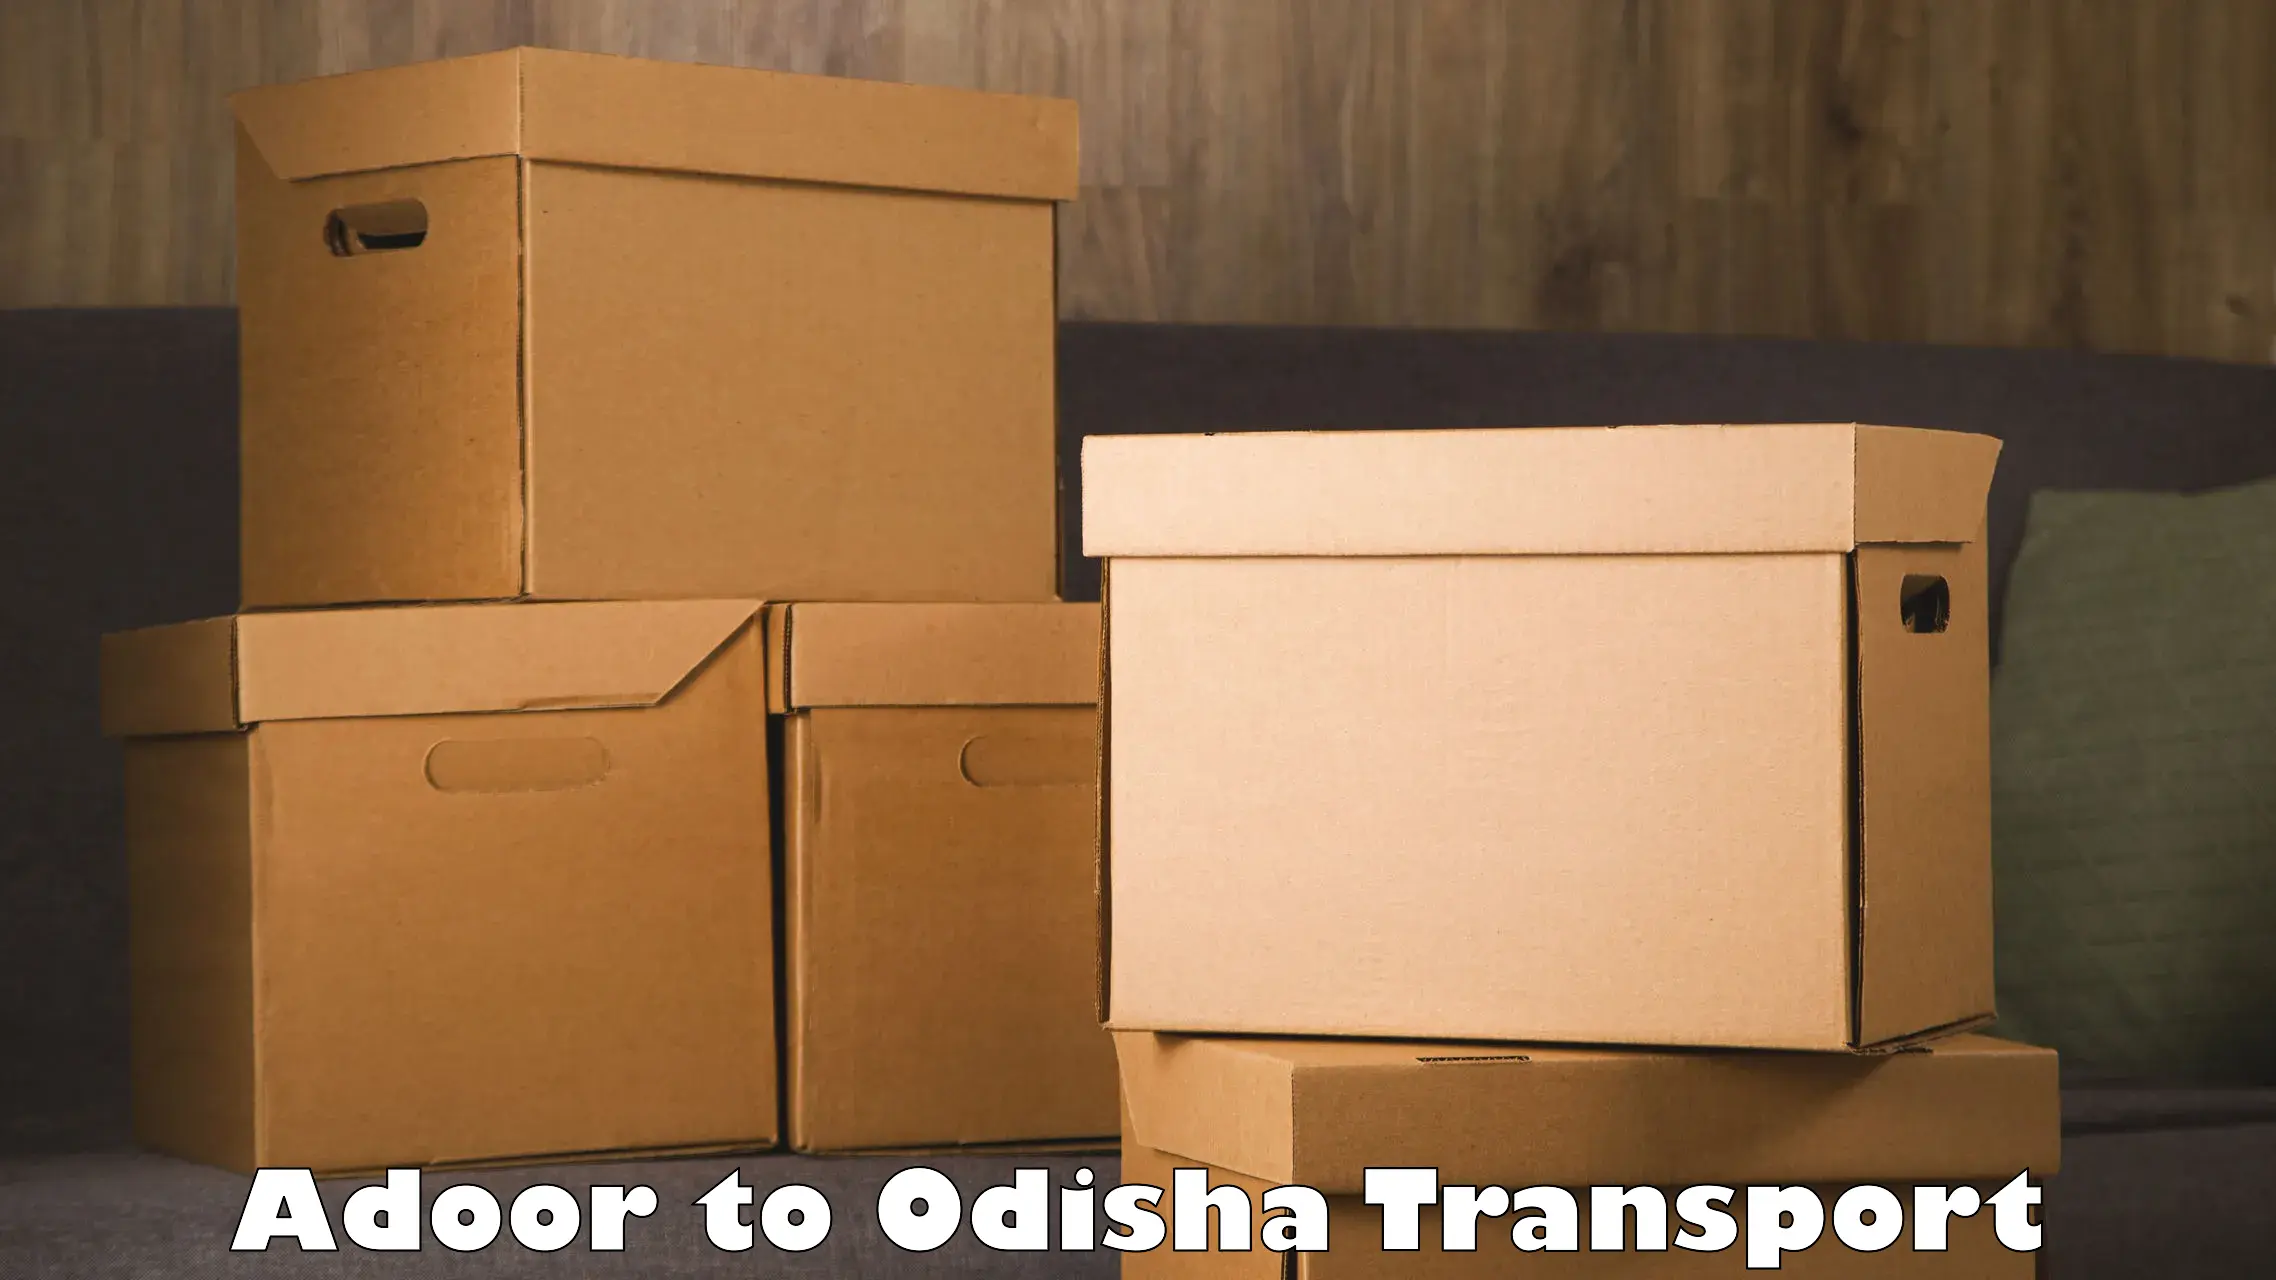 Interstate transport services Adoor to Odisha